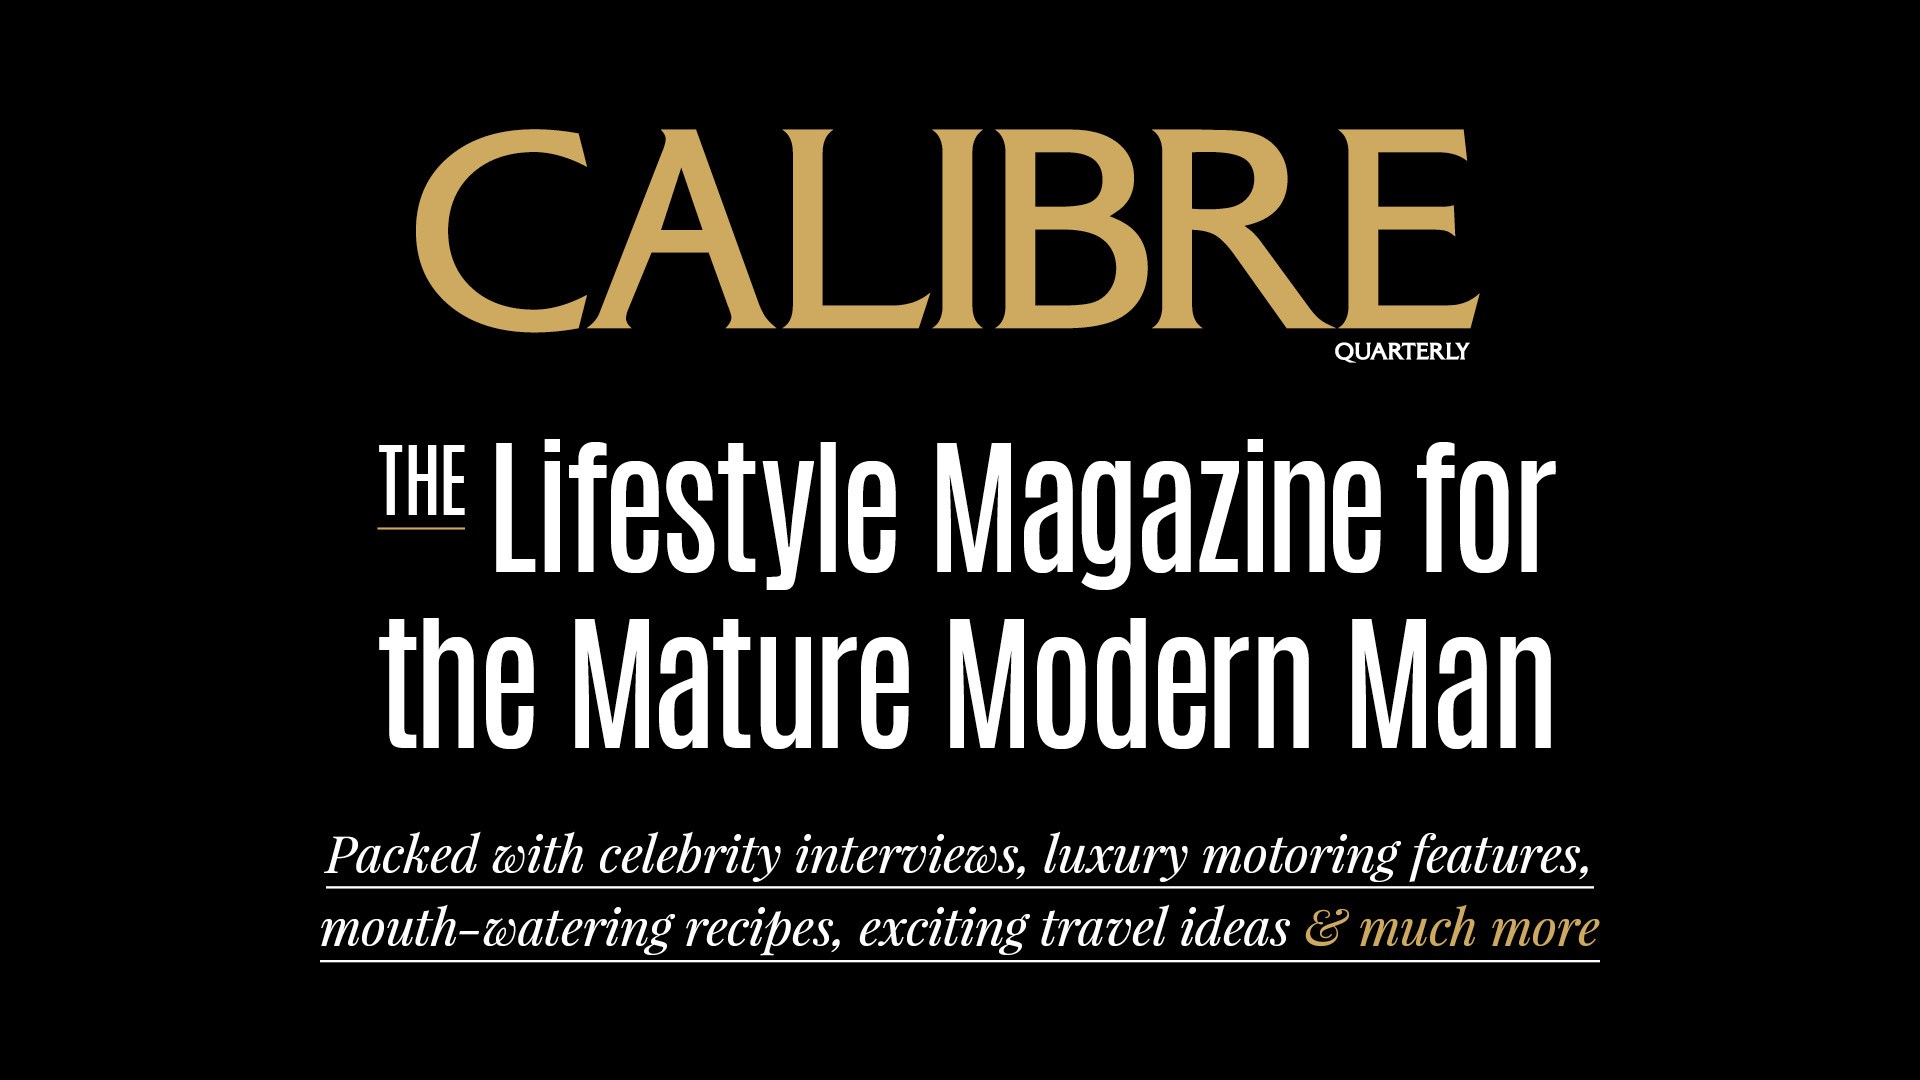 Announcing The Launch of CALIBRE Quarterly Magazine